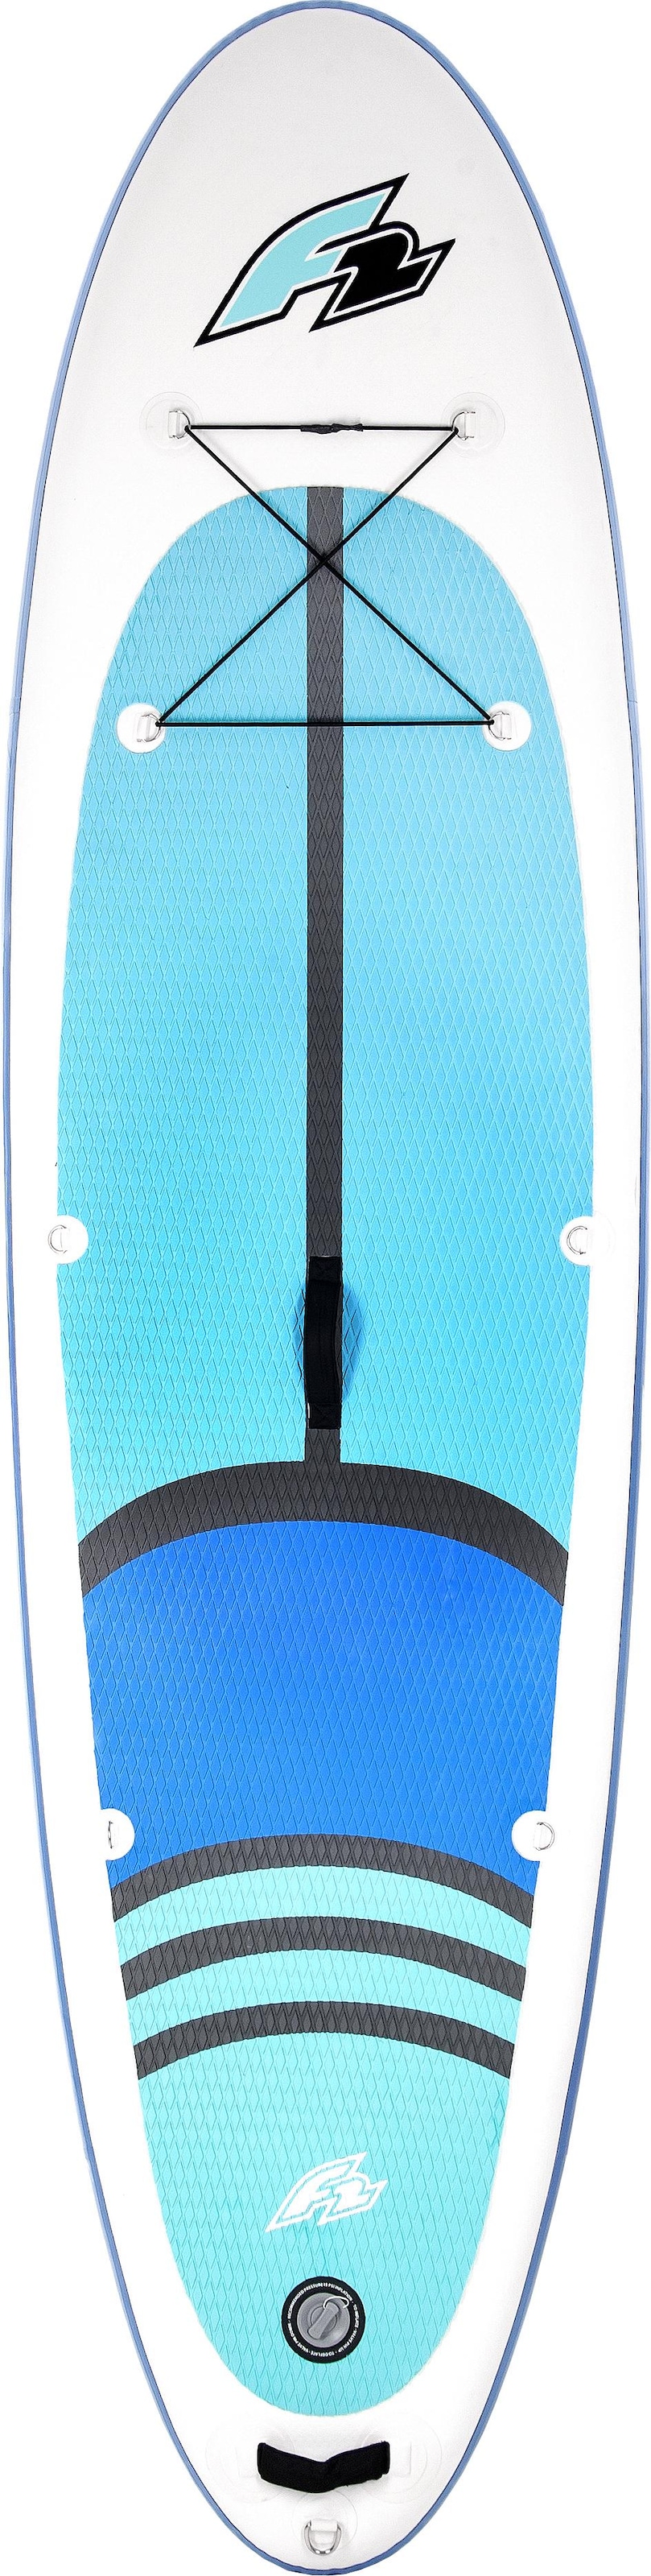 »F2 tlg., Paddel, Cross«, Paddling F2 (Set, Up Stand SUP-Board Inflatable und bei Pumpe mit Transportrucksack), 5